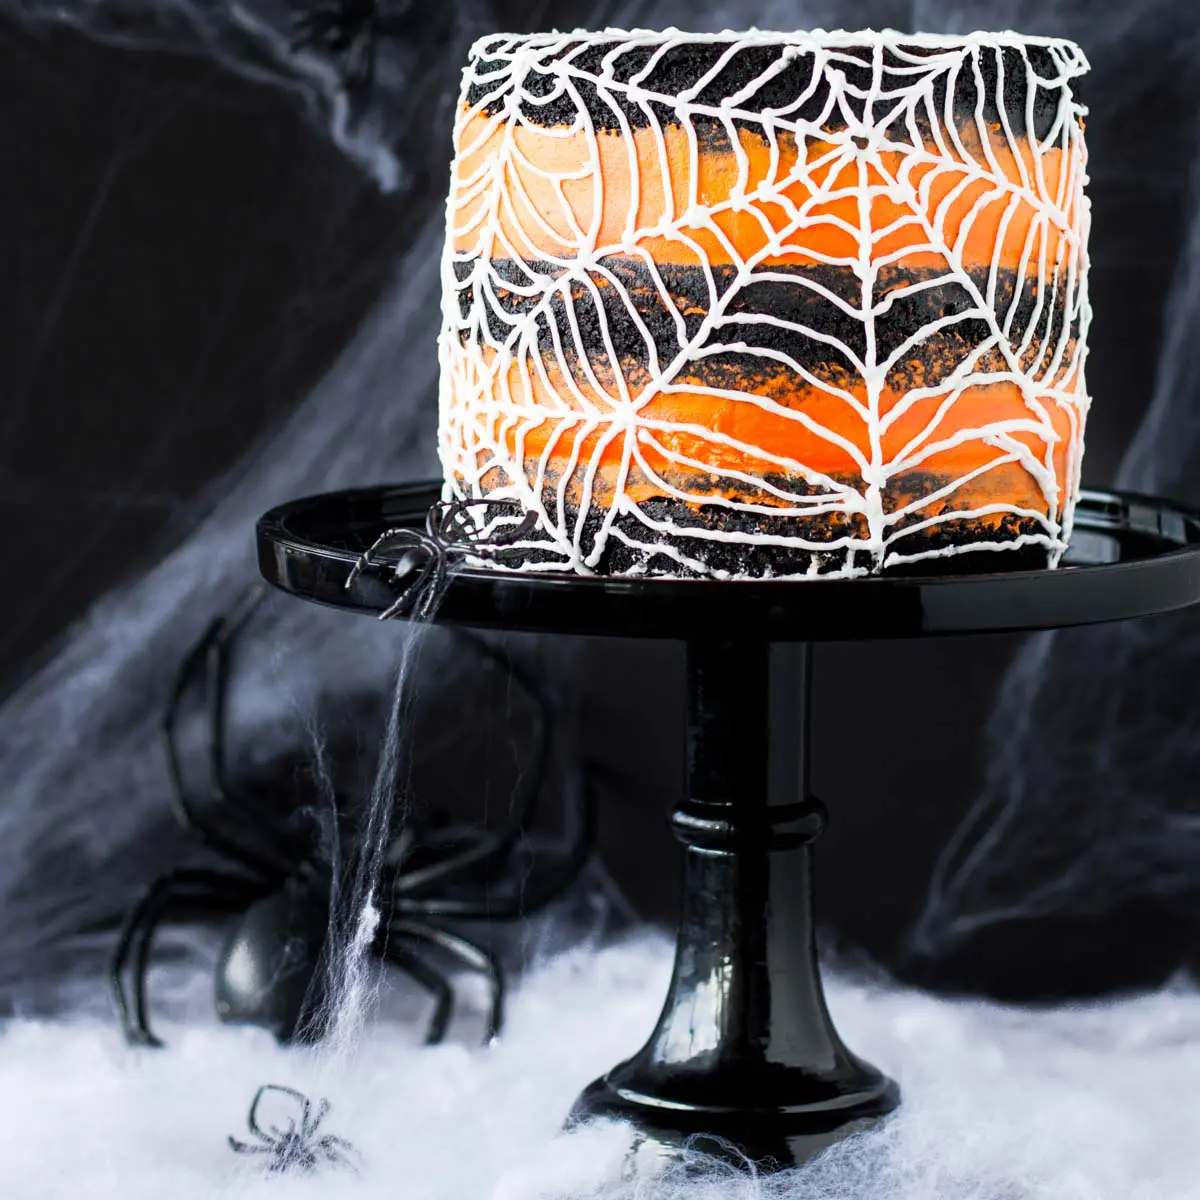 Halloween Spider Web Cake - Keep Halloween 2020 sweet with cake!